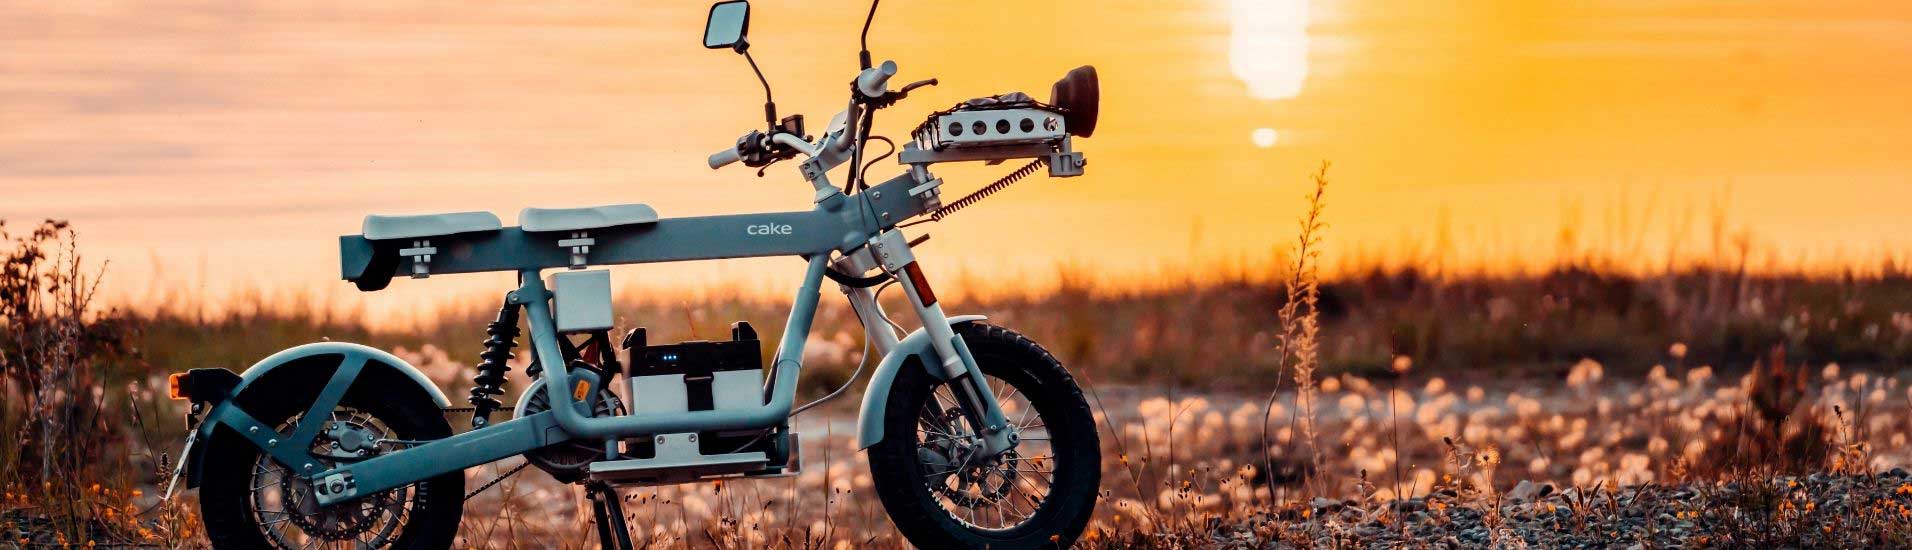 Cake Elektro-Motorrad mit Sonnenuntergang